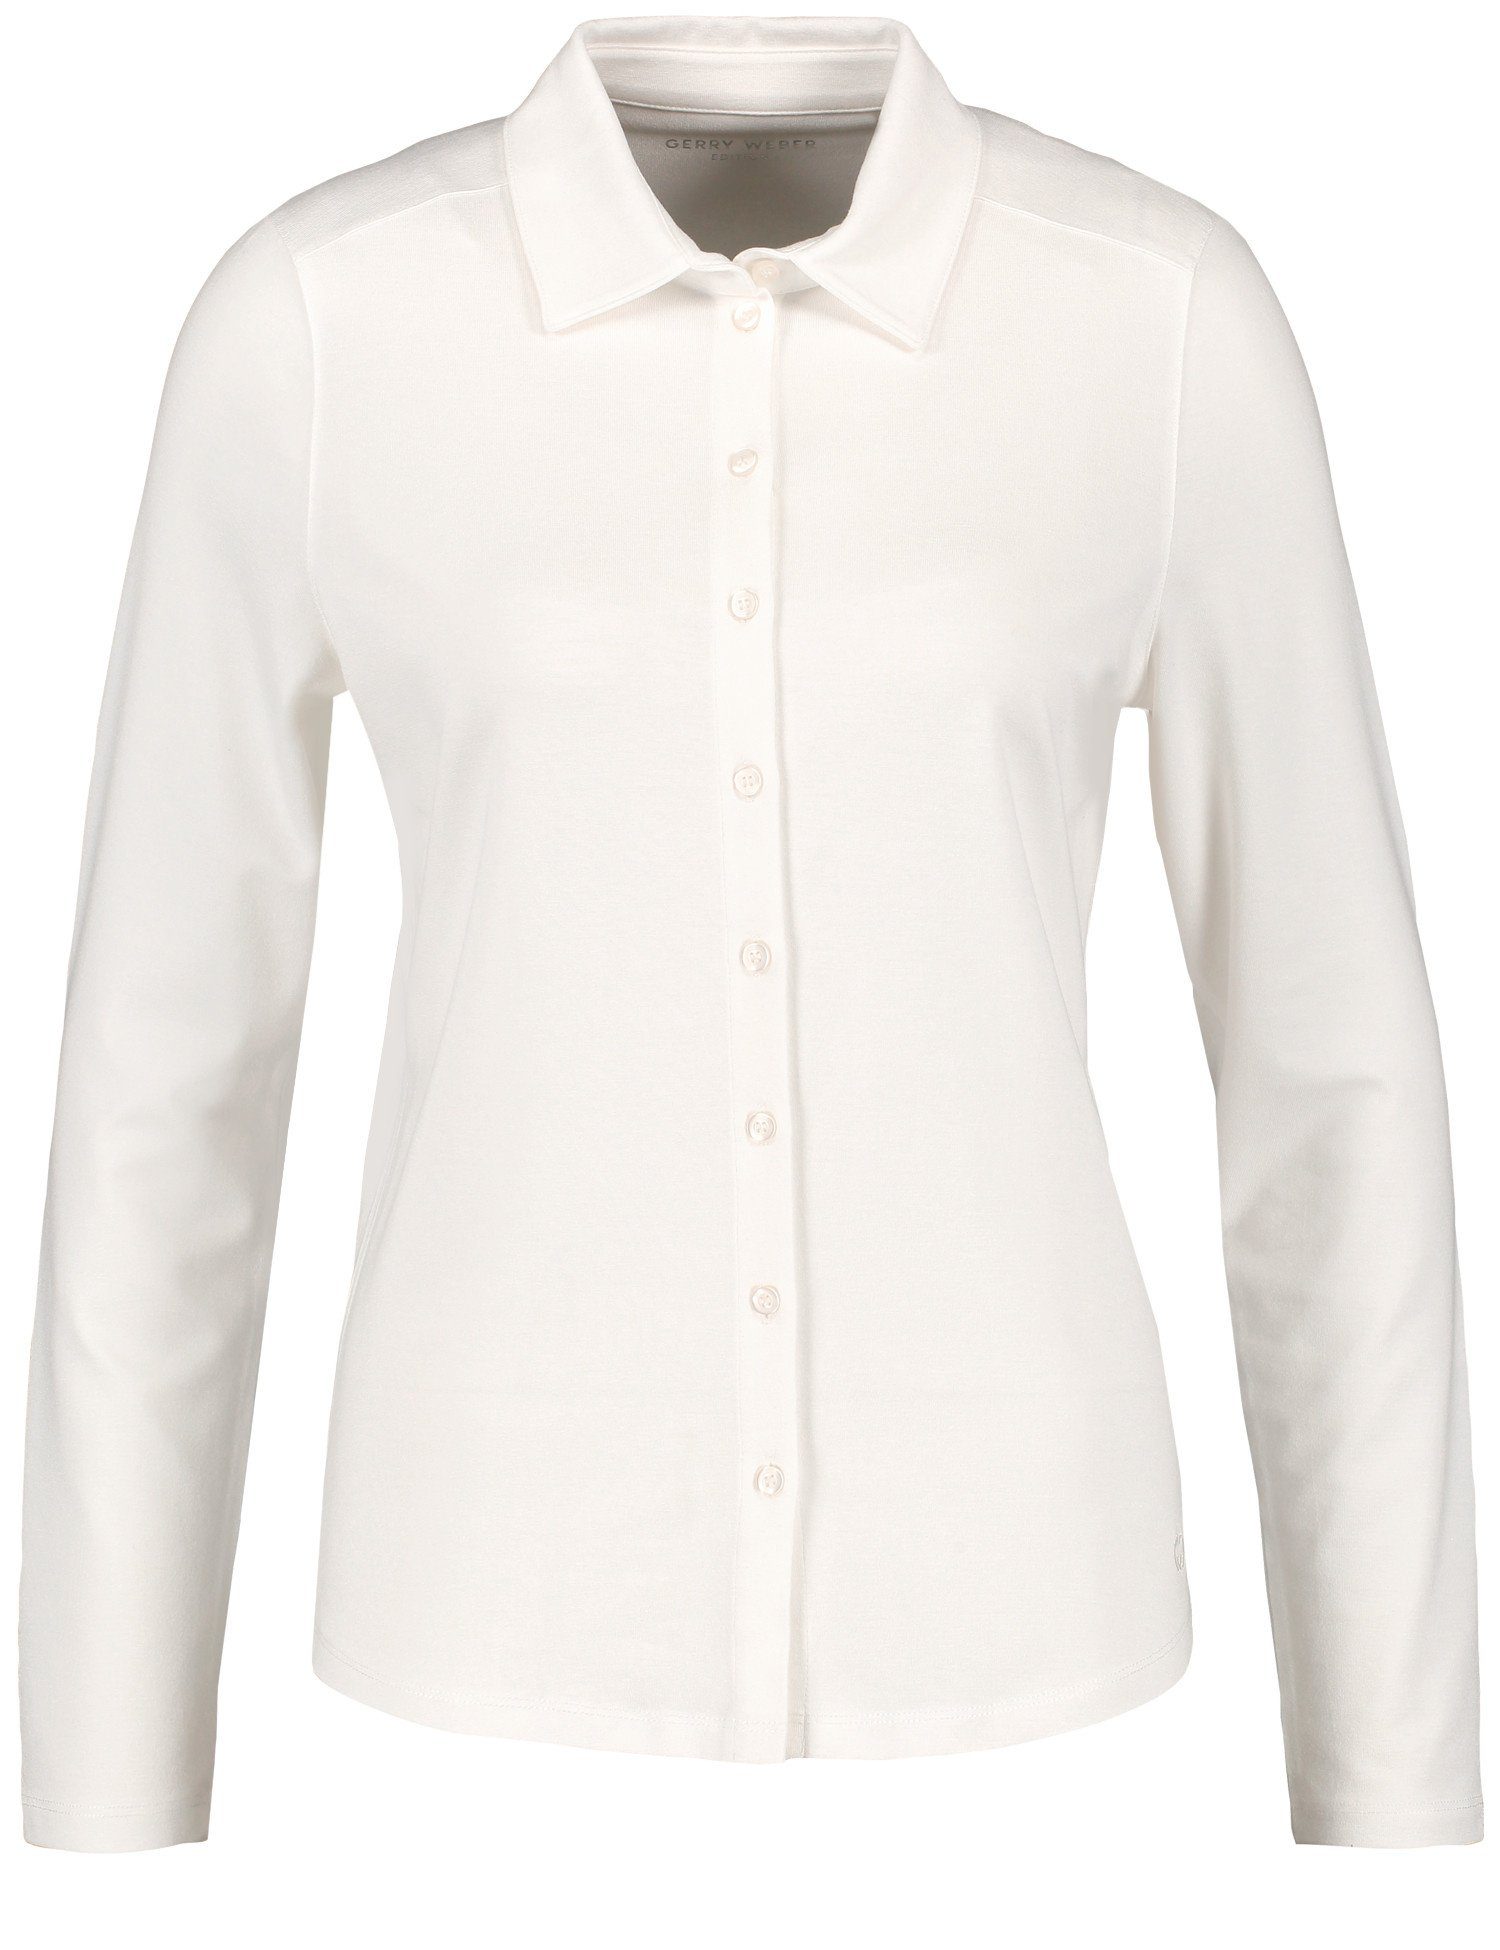 durchgehender Langarm GERRY Knopfleiste Poloshirt Langarm-Poloshirt WEBER Off-white mit